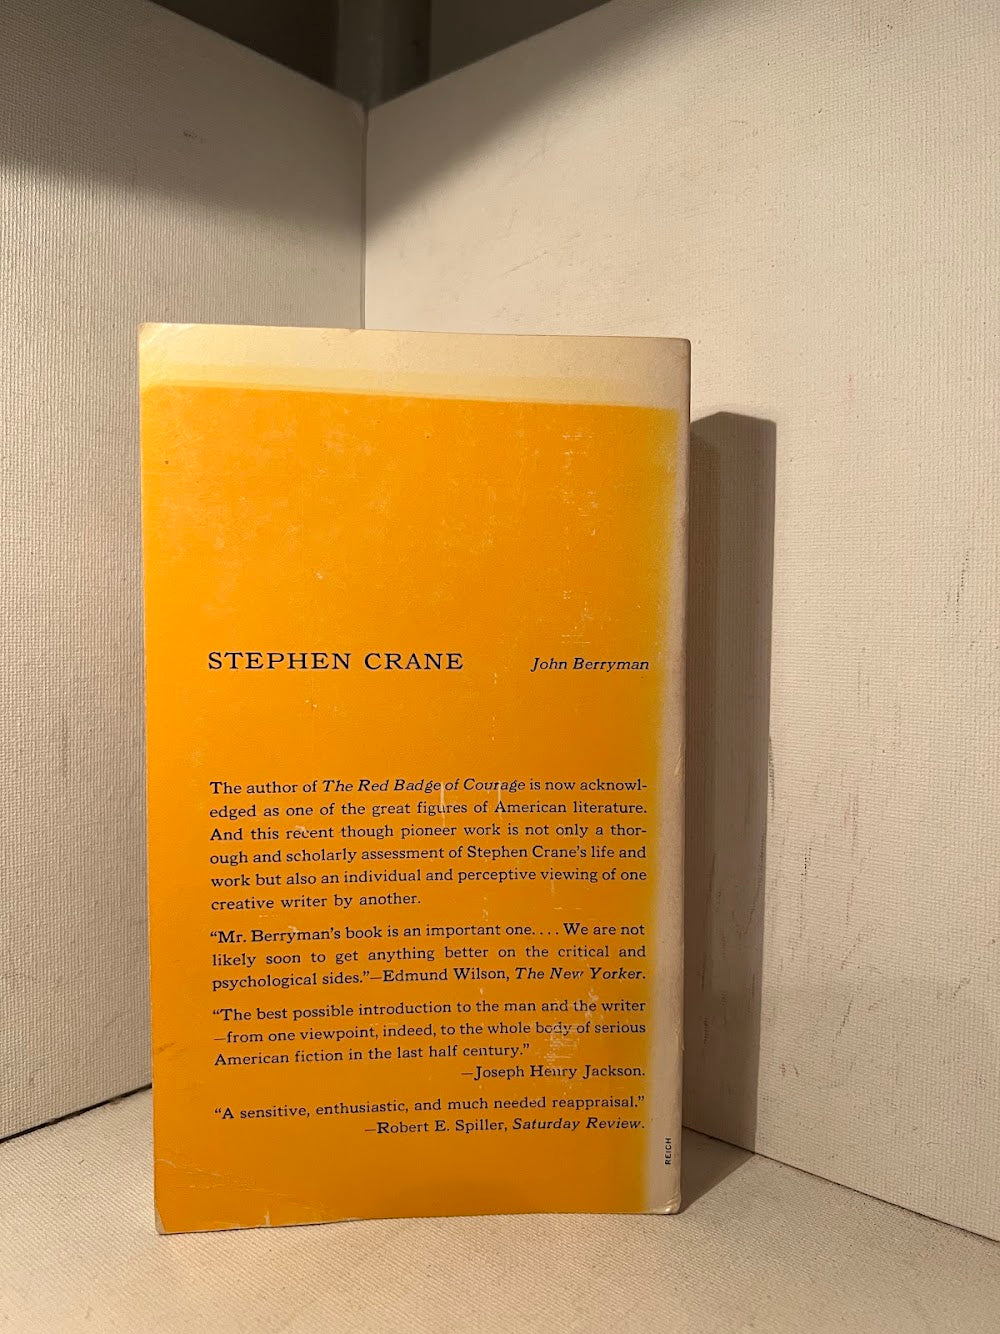 Stephen Crane by John Berryman